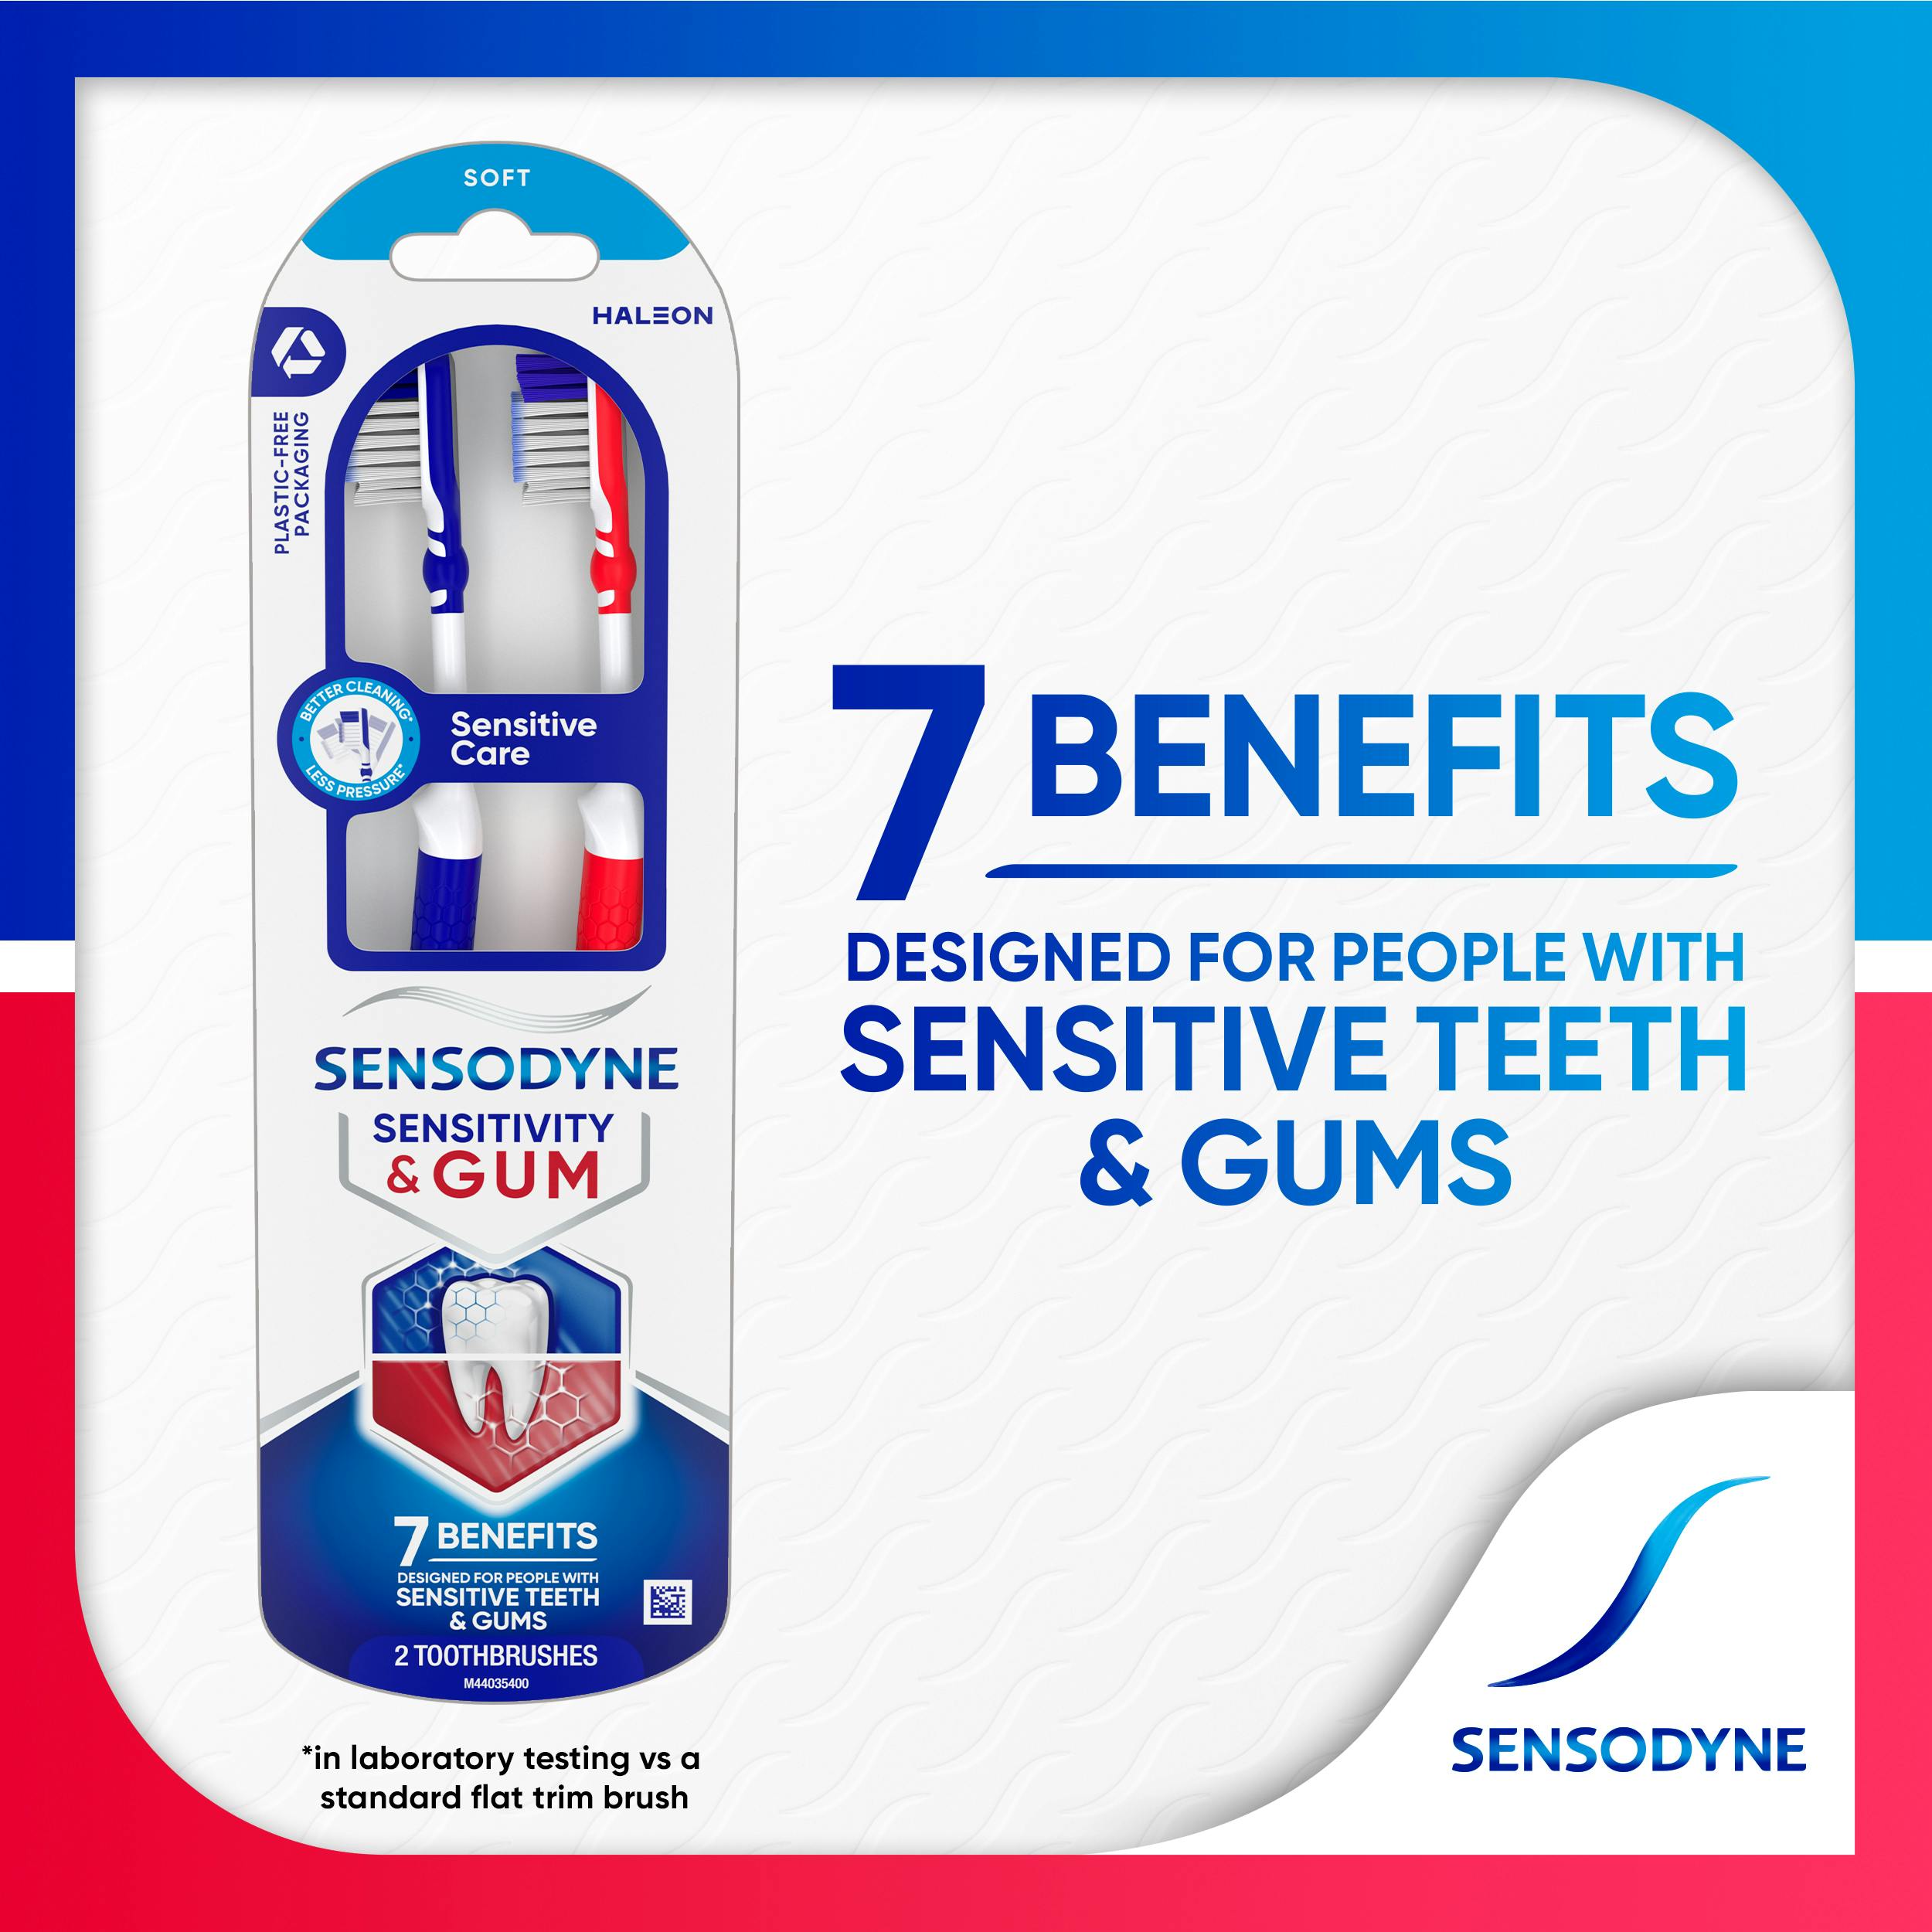 Sensodyne Sensitive Care Toothbrush1